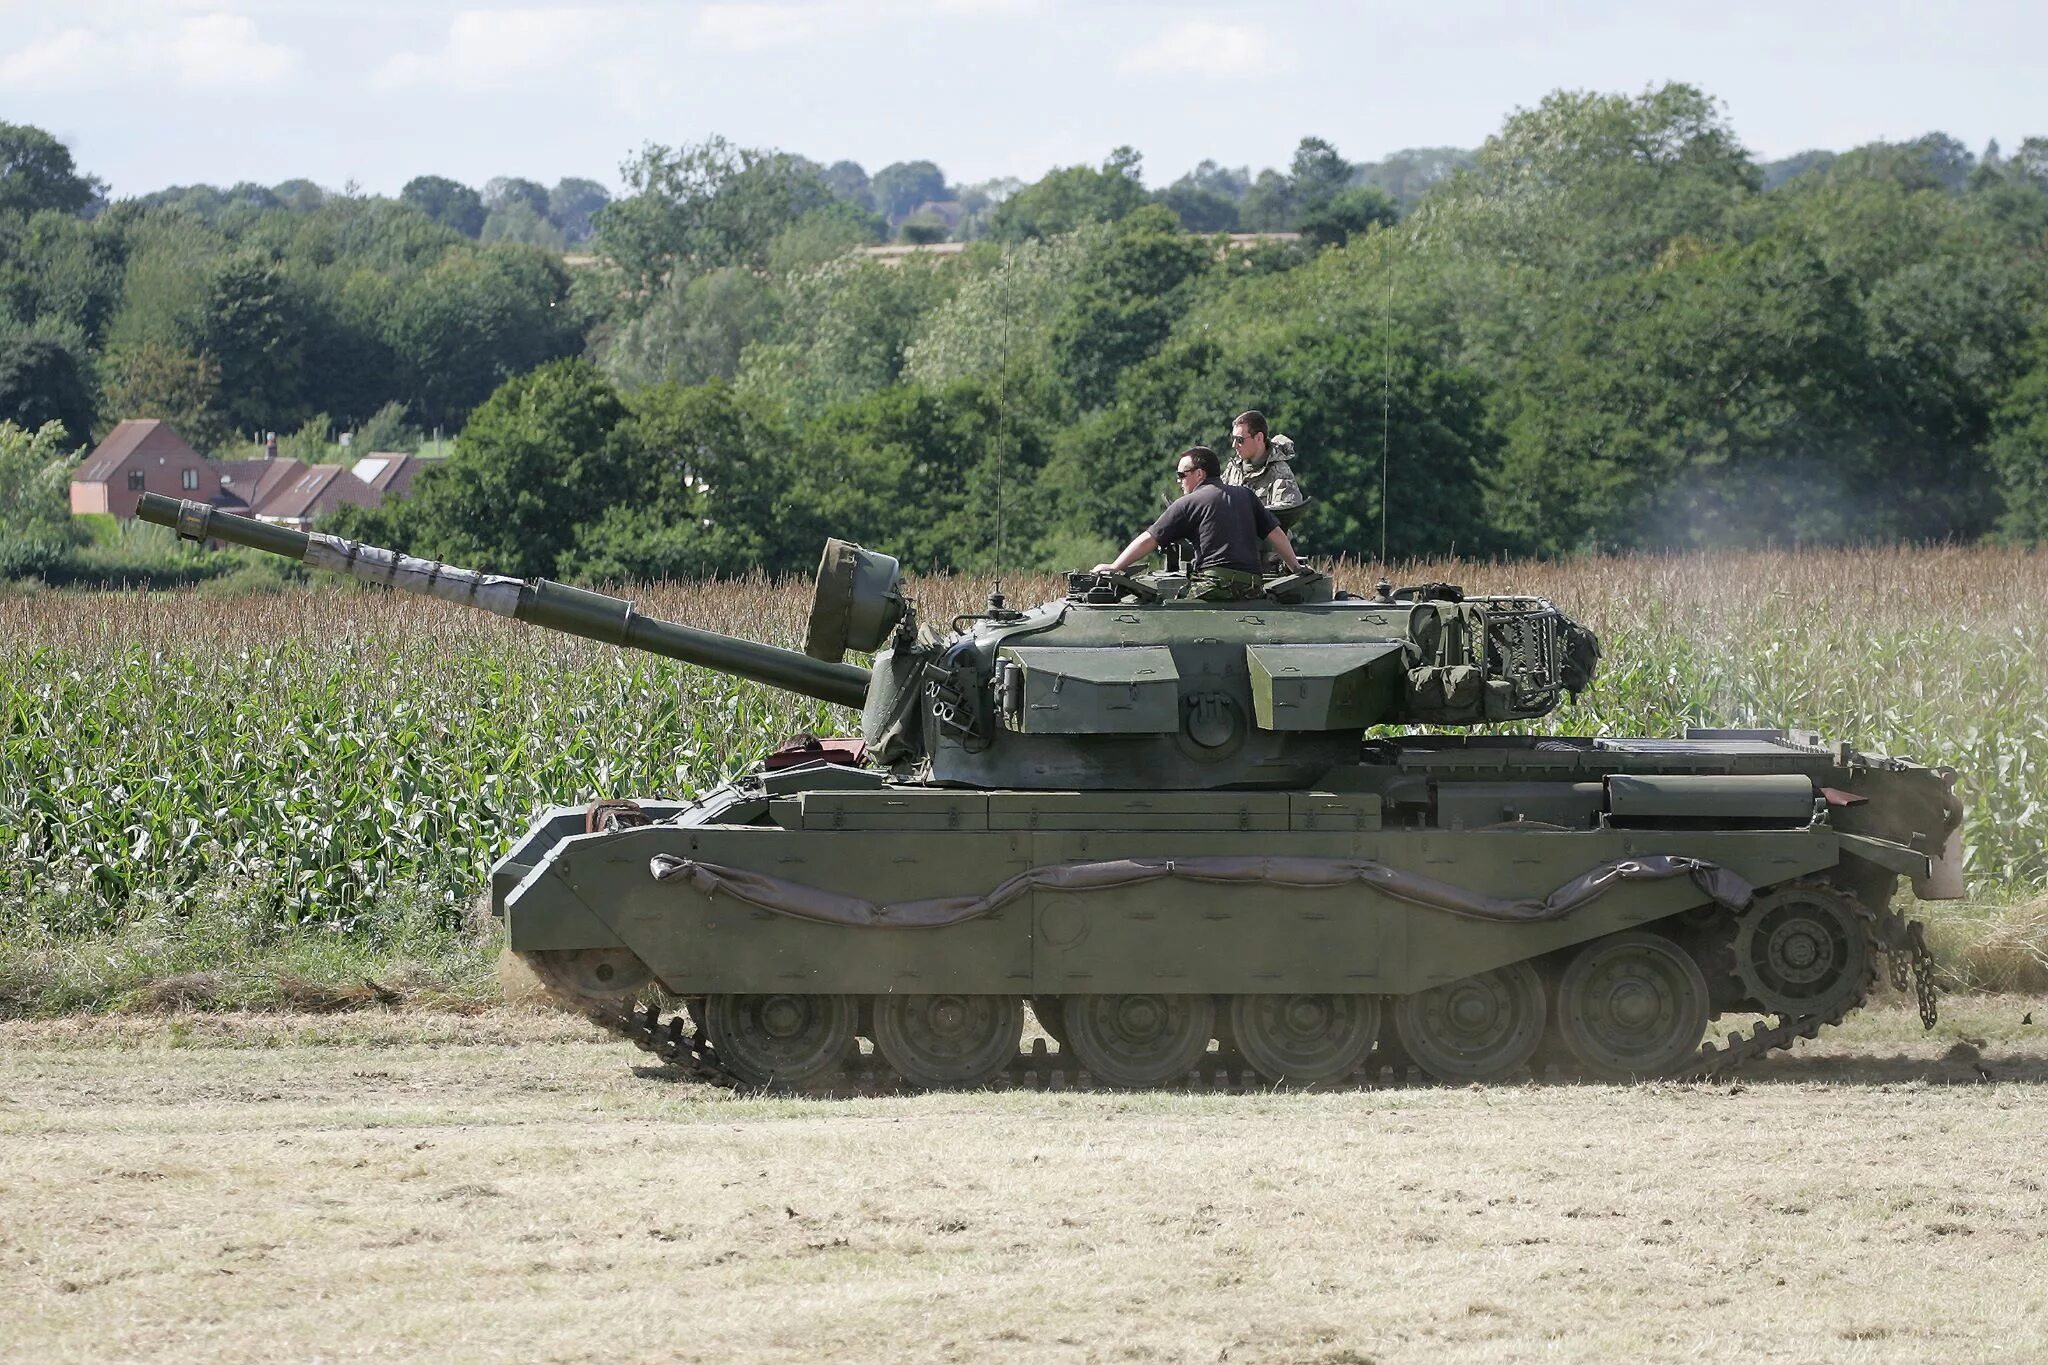 Centurion MK. 13. Центурион танк. Британский танк Центурион. Танк Центурион МК 13. Fifine tank